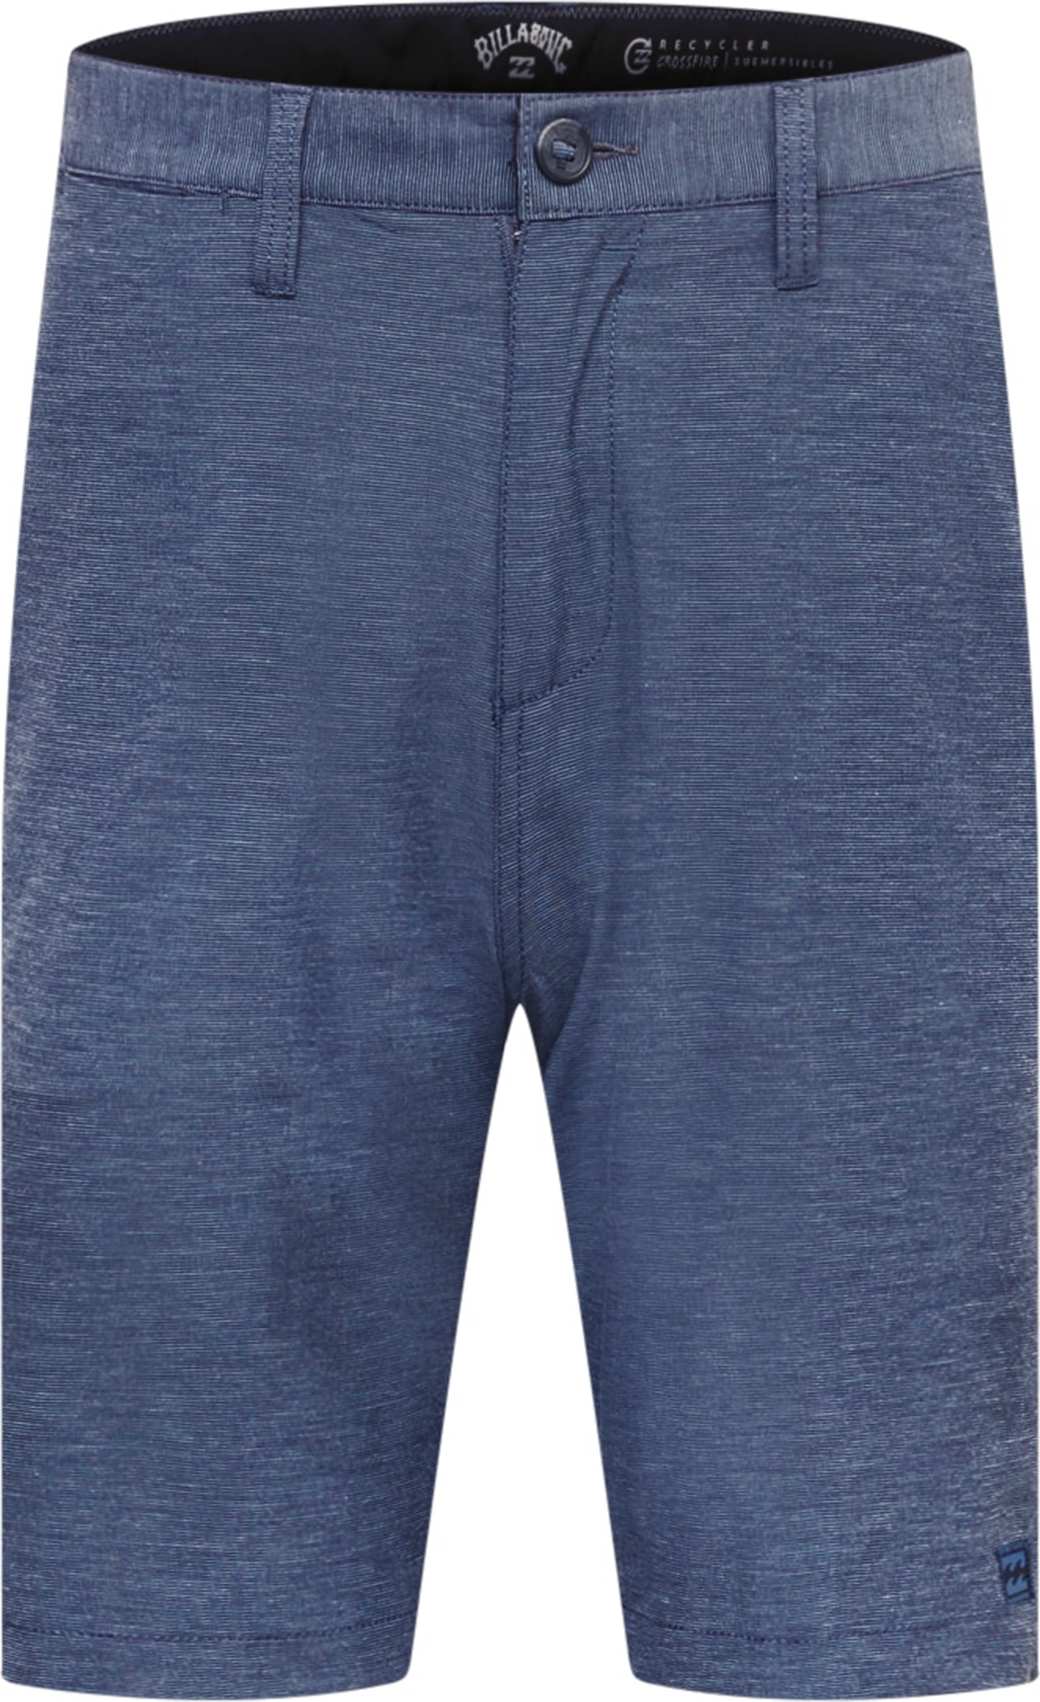 BILLABONG Chino kalhoty 'CROSSFIRE' tmavě modrá